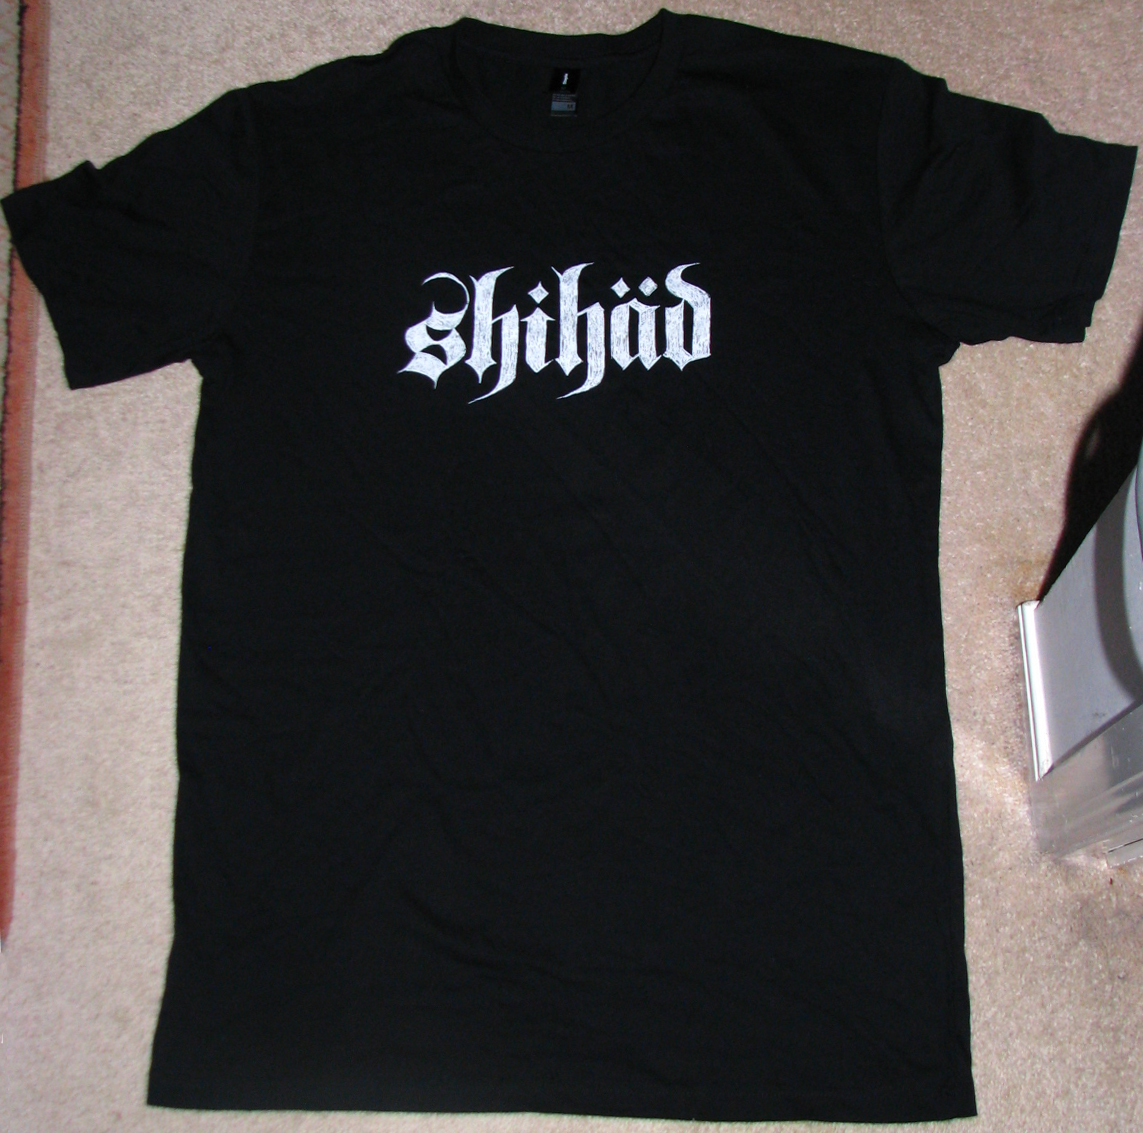 2011 - Old School Shihad logo, shirt.jpg